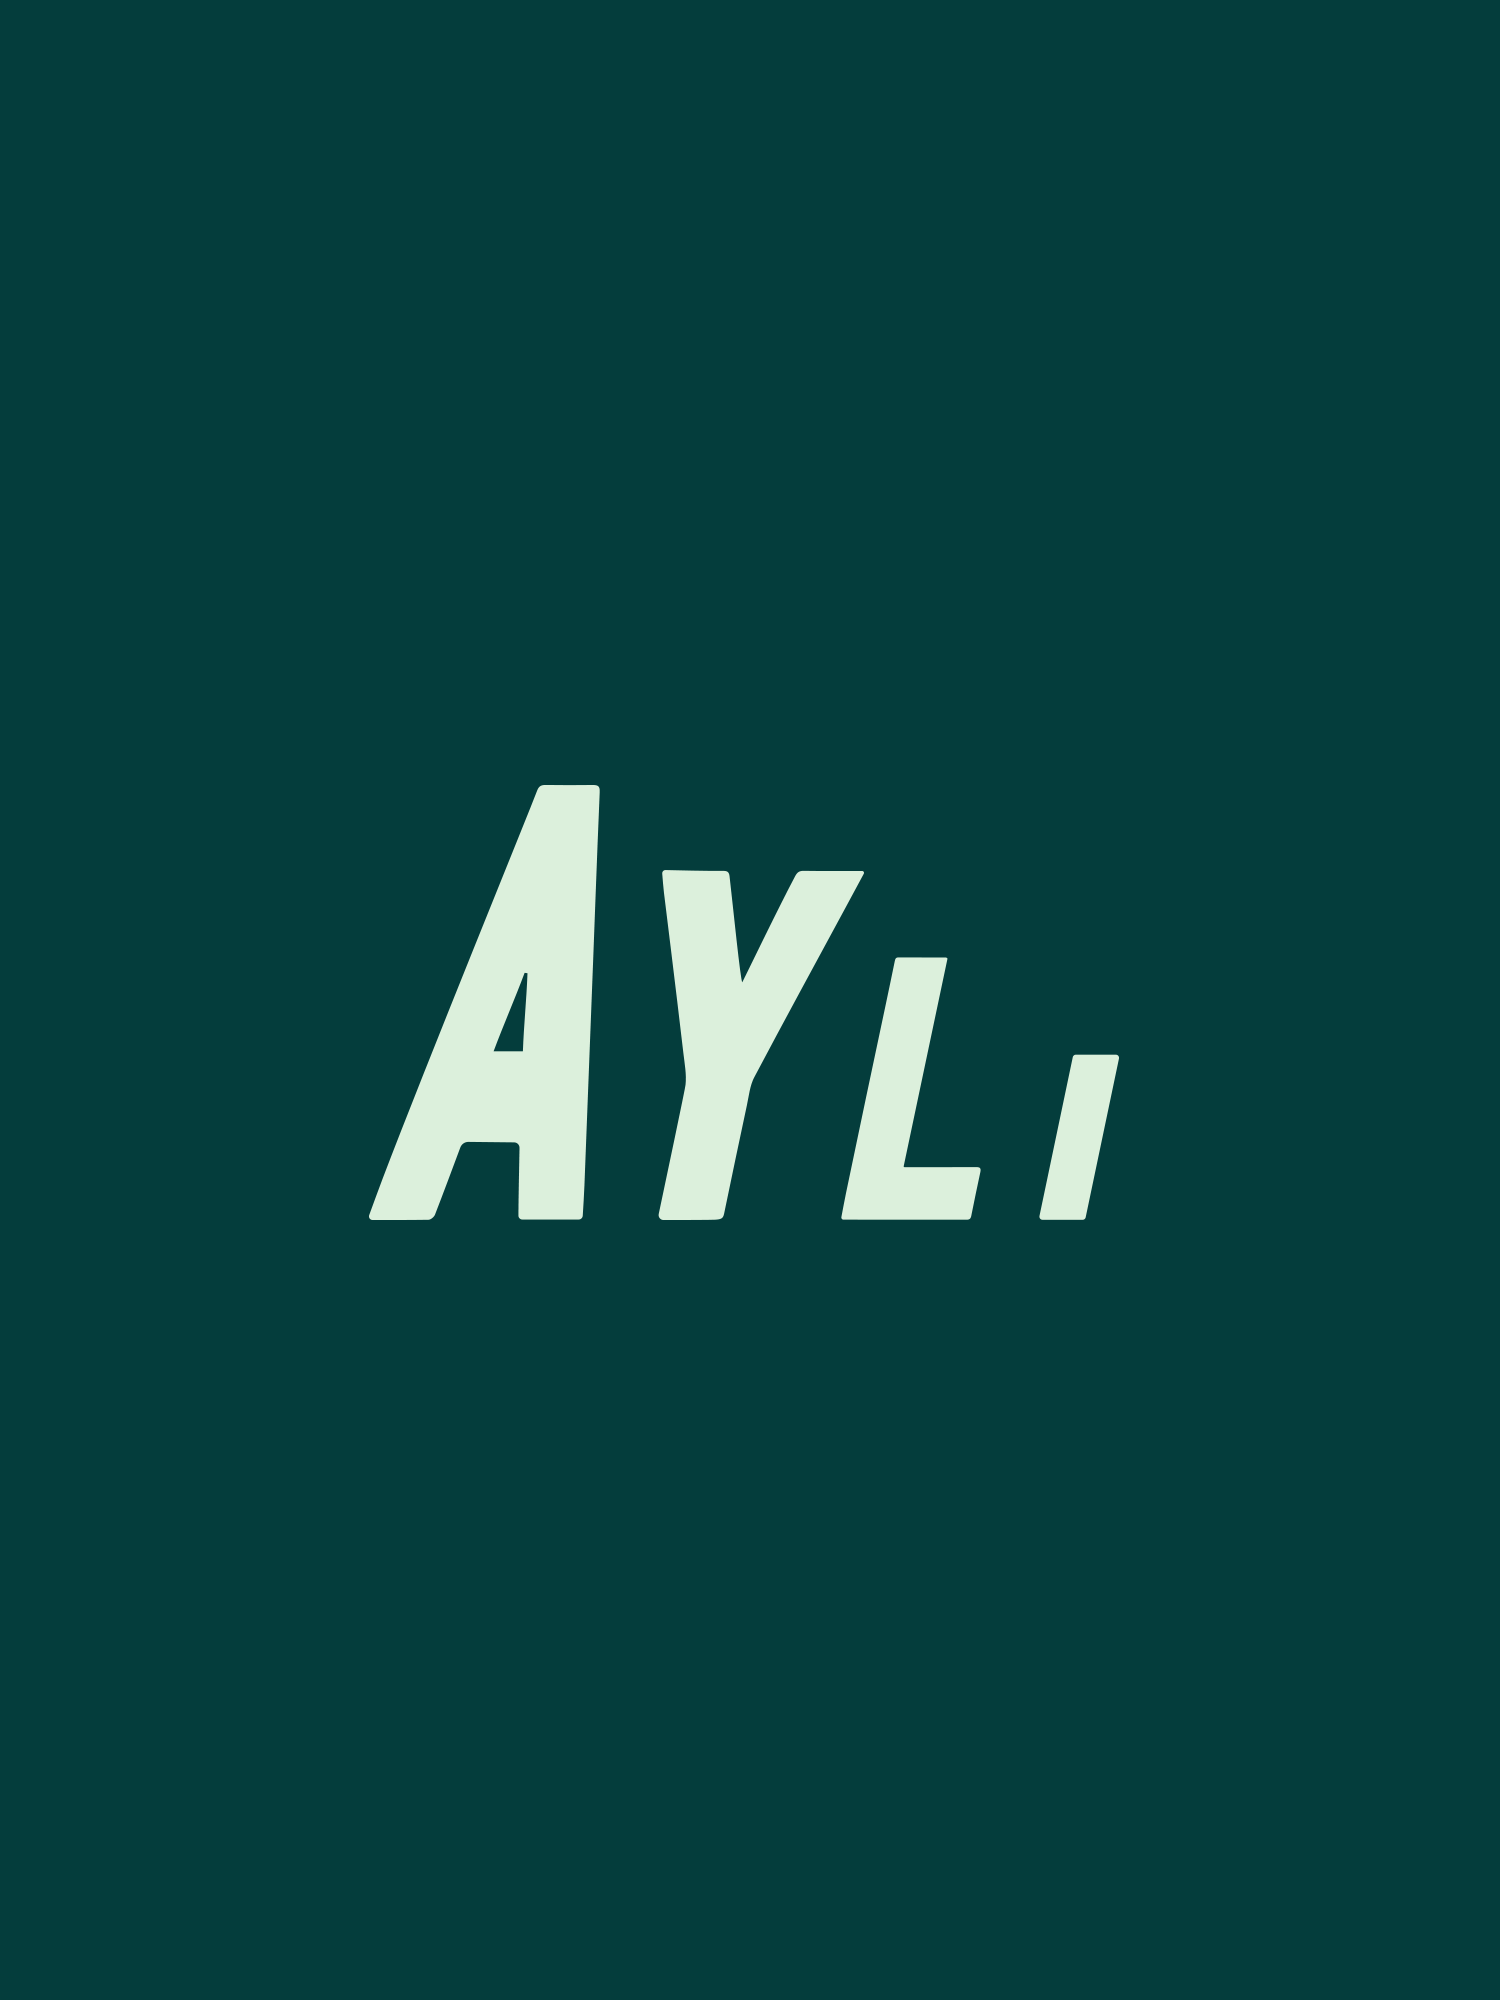 09.-Ayli_Logo-Versions